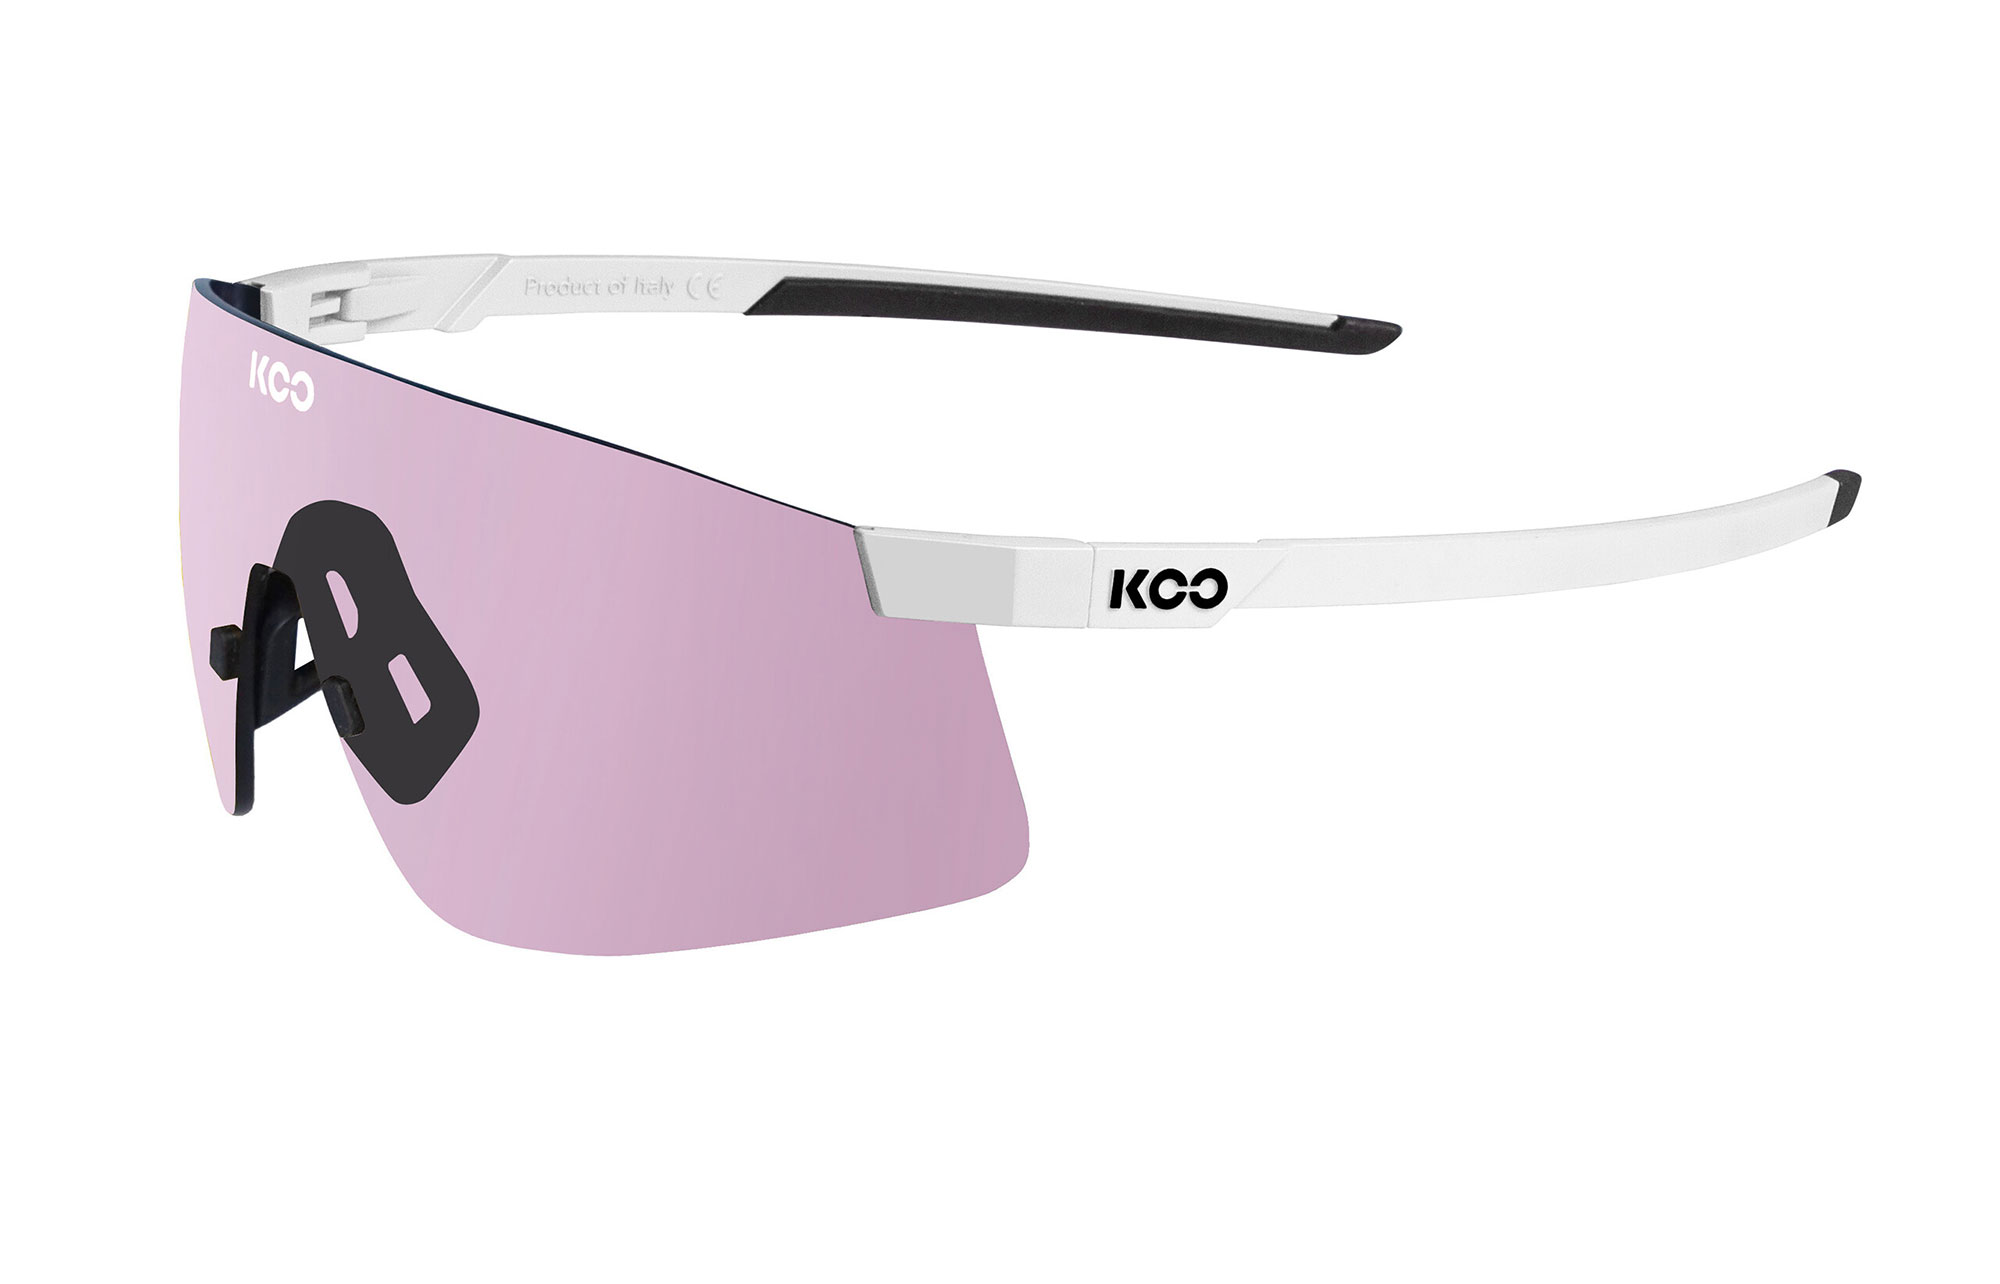 KOO Nova Glasses - Photochromic | R&A Cycles